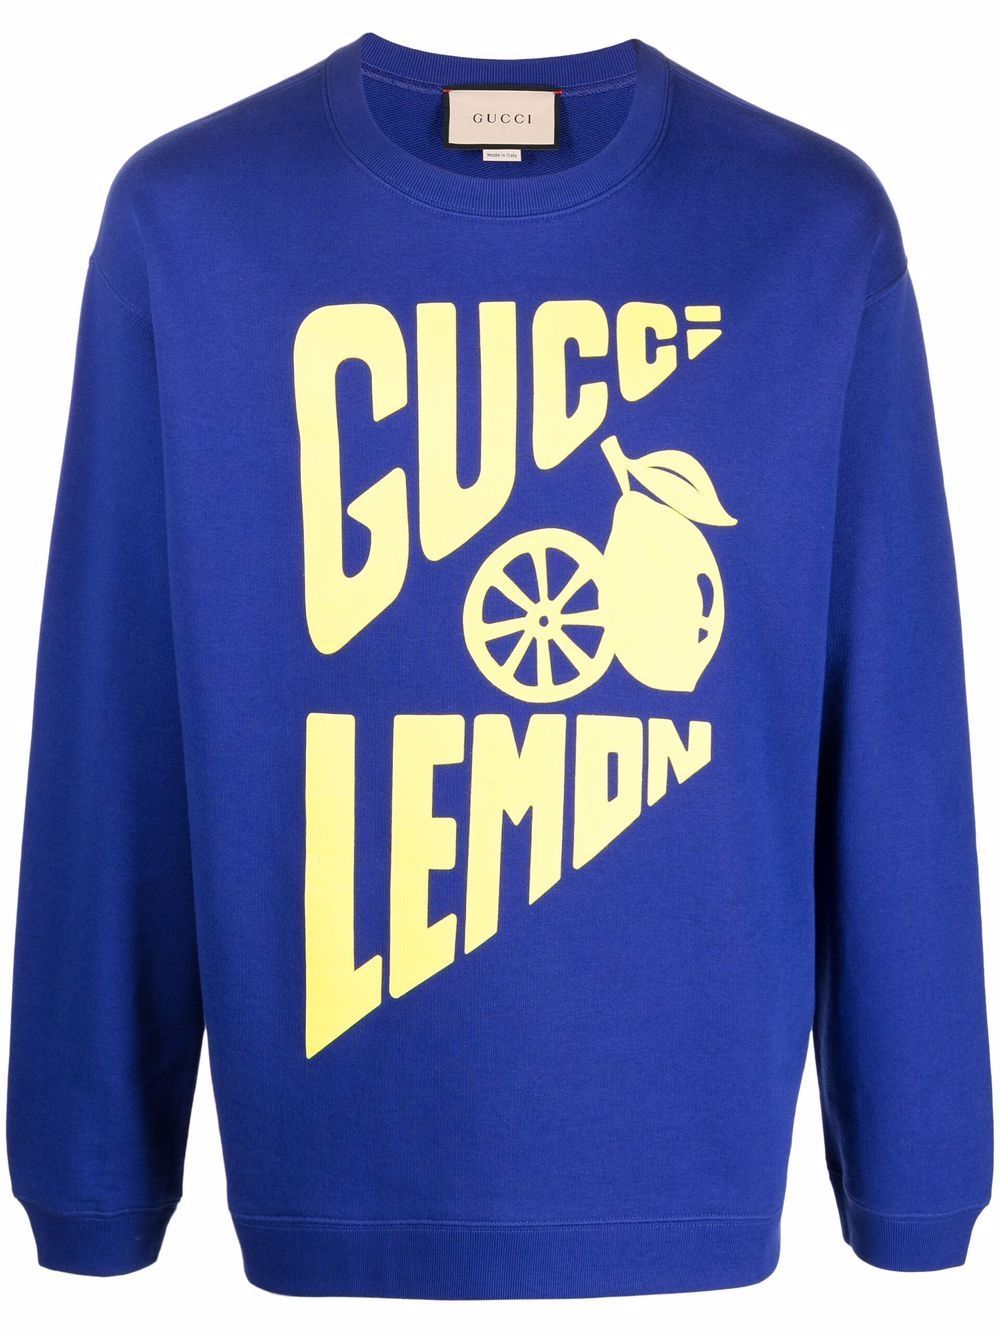 Gucci 'Gucci Lemon' cotton sweatshirt - Blue von Gucci